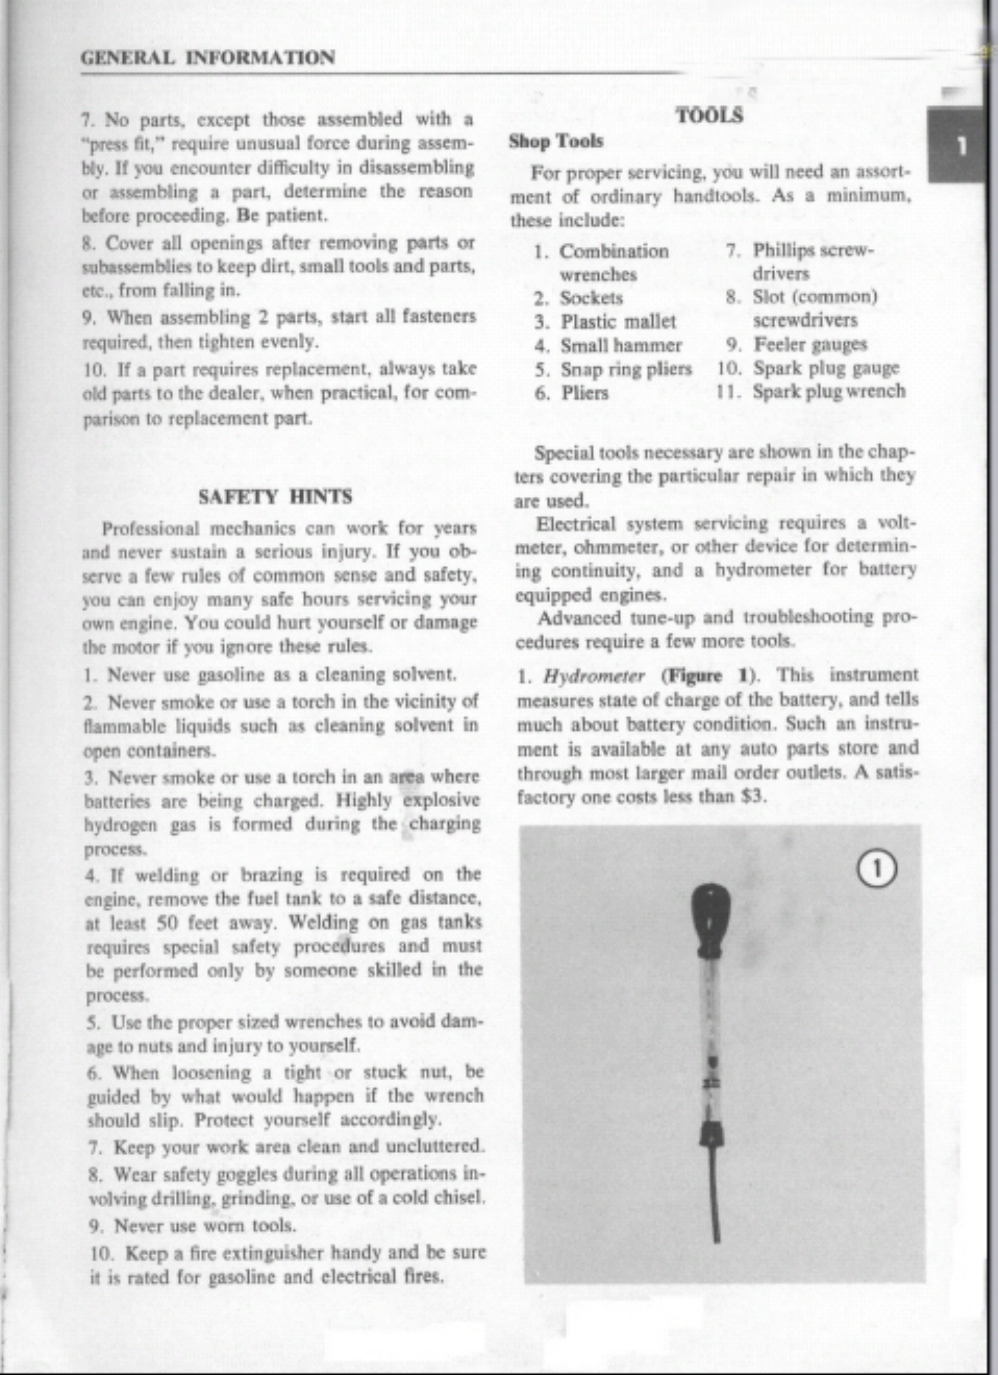 1965-1978 Evinrude Johnson 1.5hp, 2hp, 3hp, 4hp, 5hp, 6hp, 9.5hp, 9.9hp, 15hp, 18hp, 25hp, 33hp, 35hp outboard motor service repair handbook Preview image 5